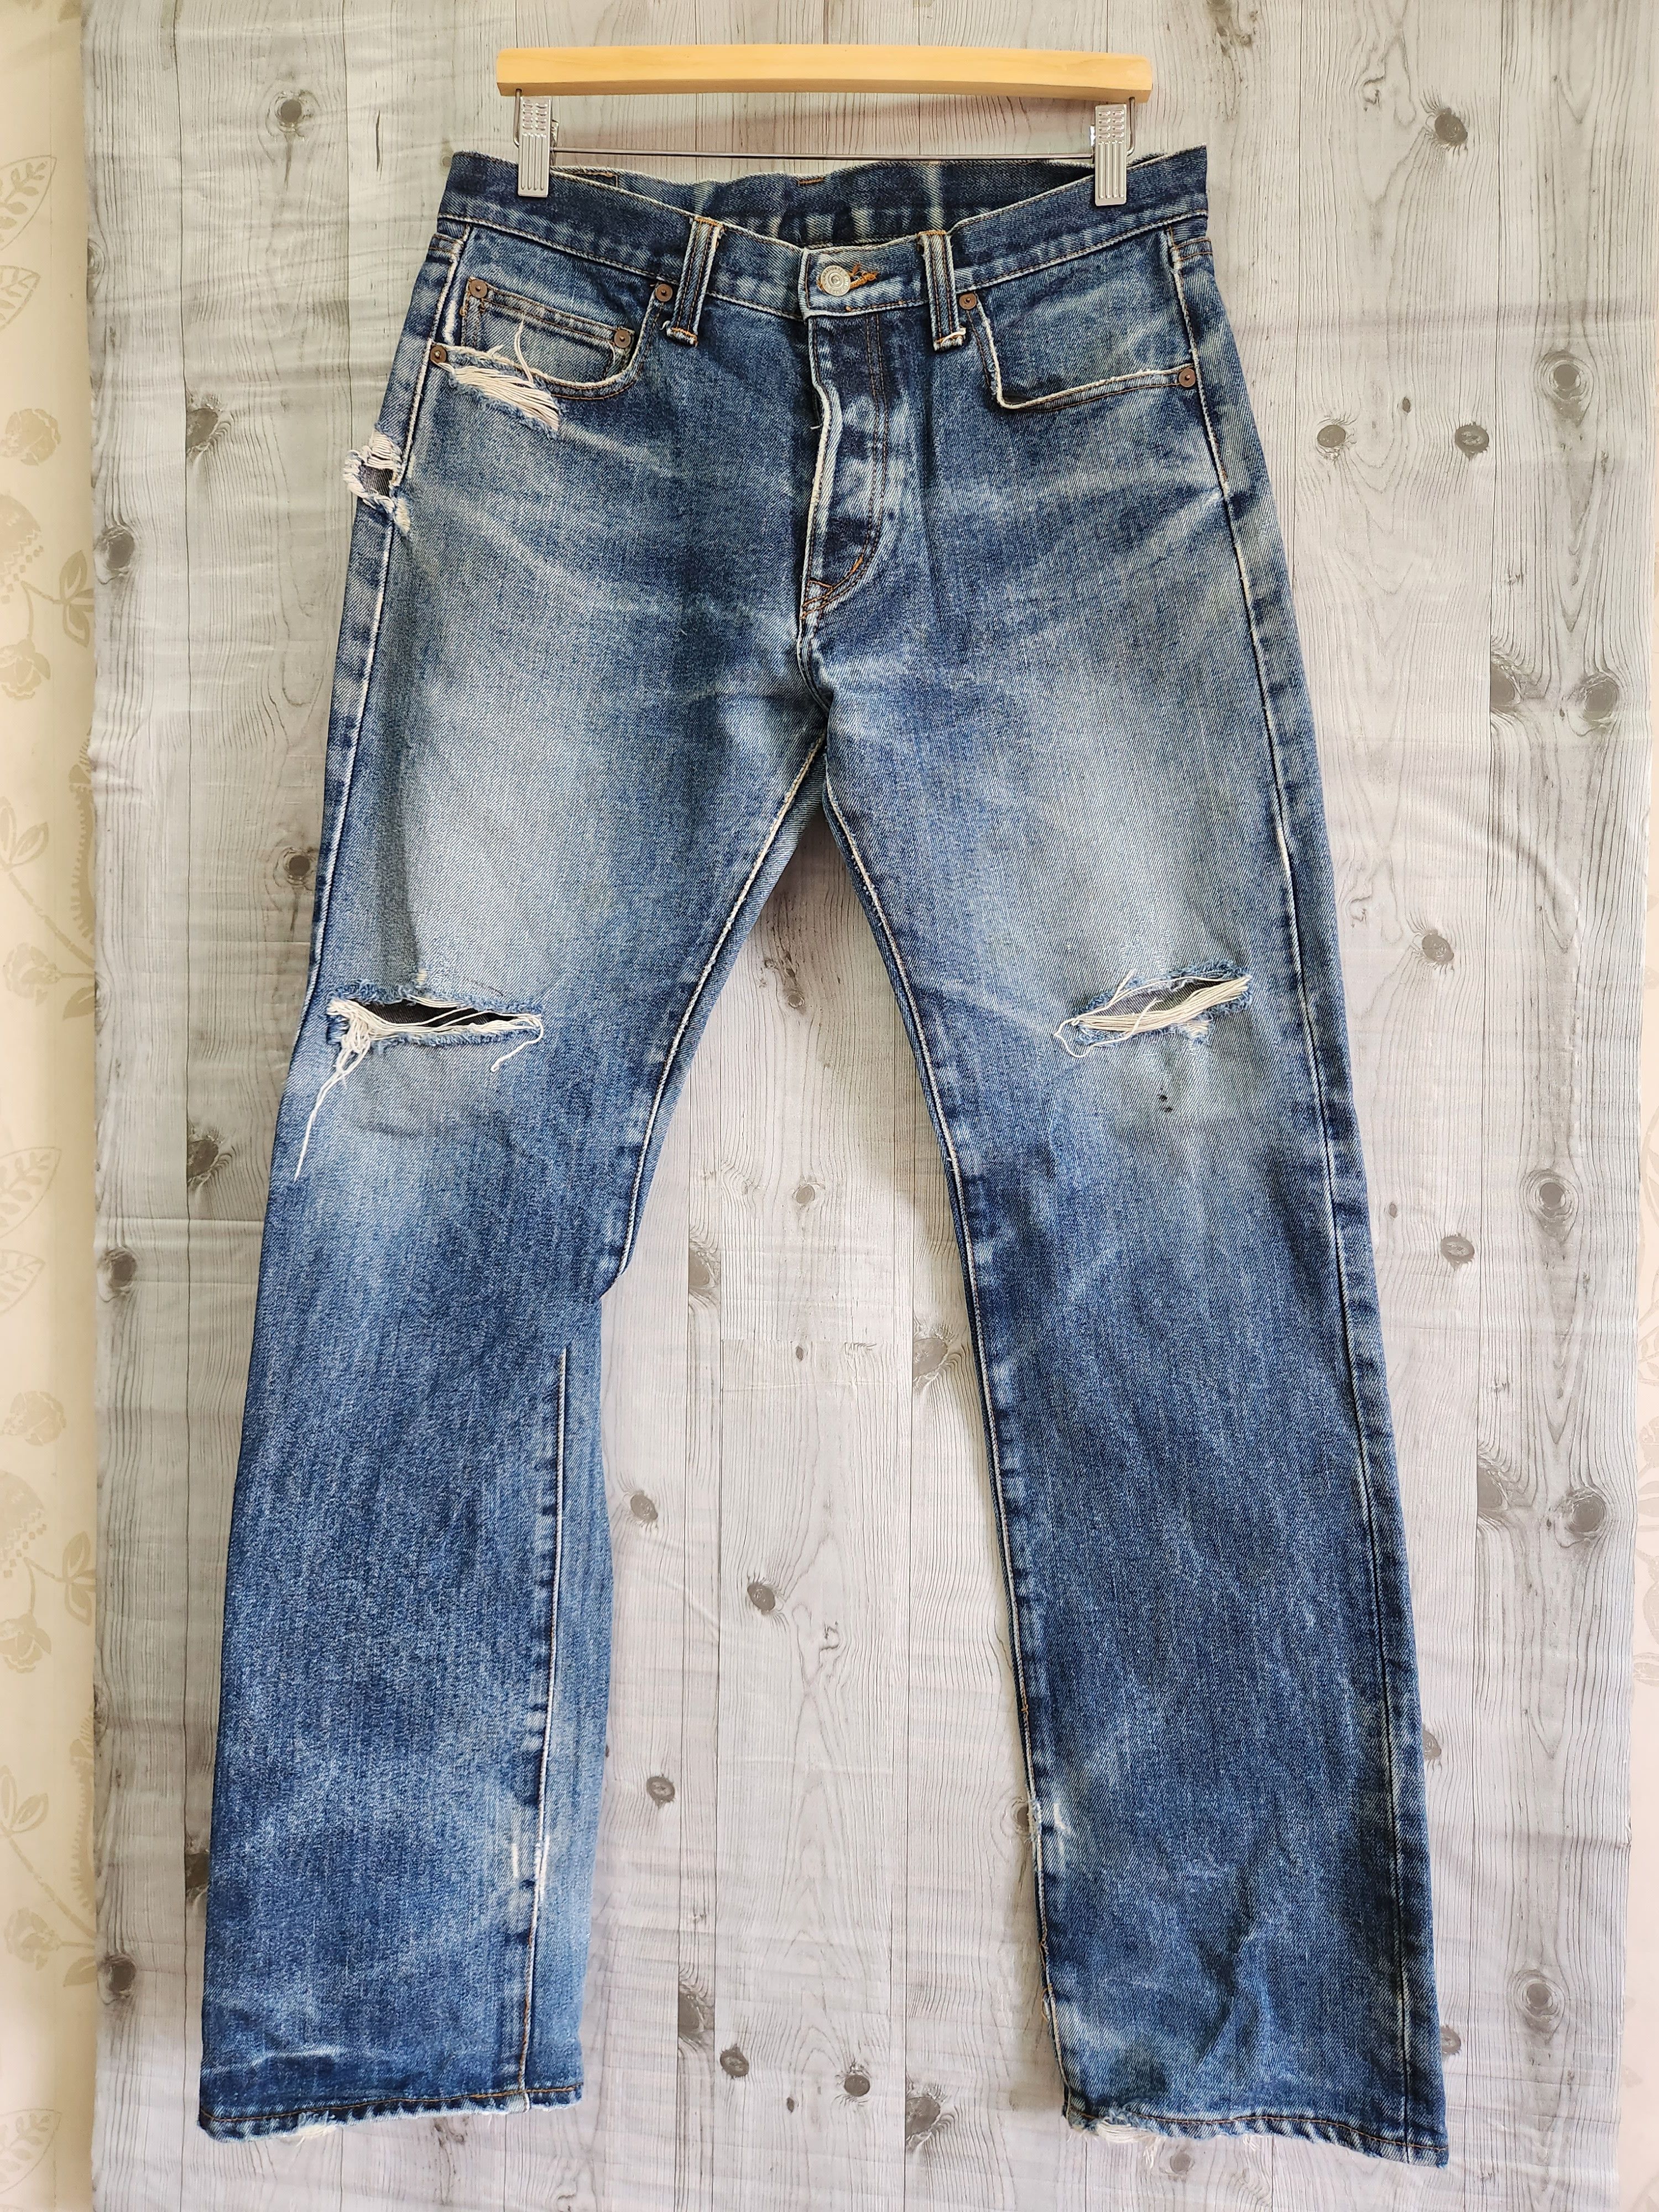 Japan Blue - Kojima Genes Japan Vintage Denim Blue Jeans Ripped - 1